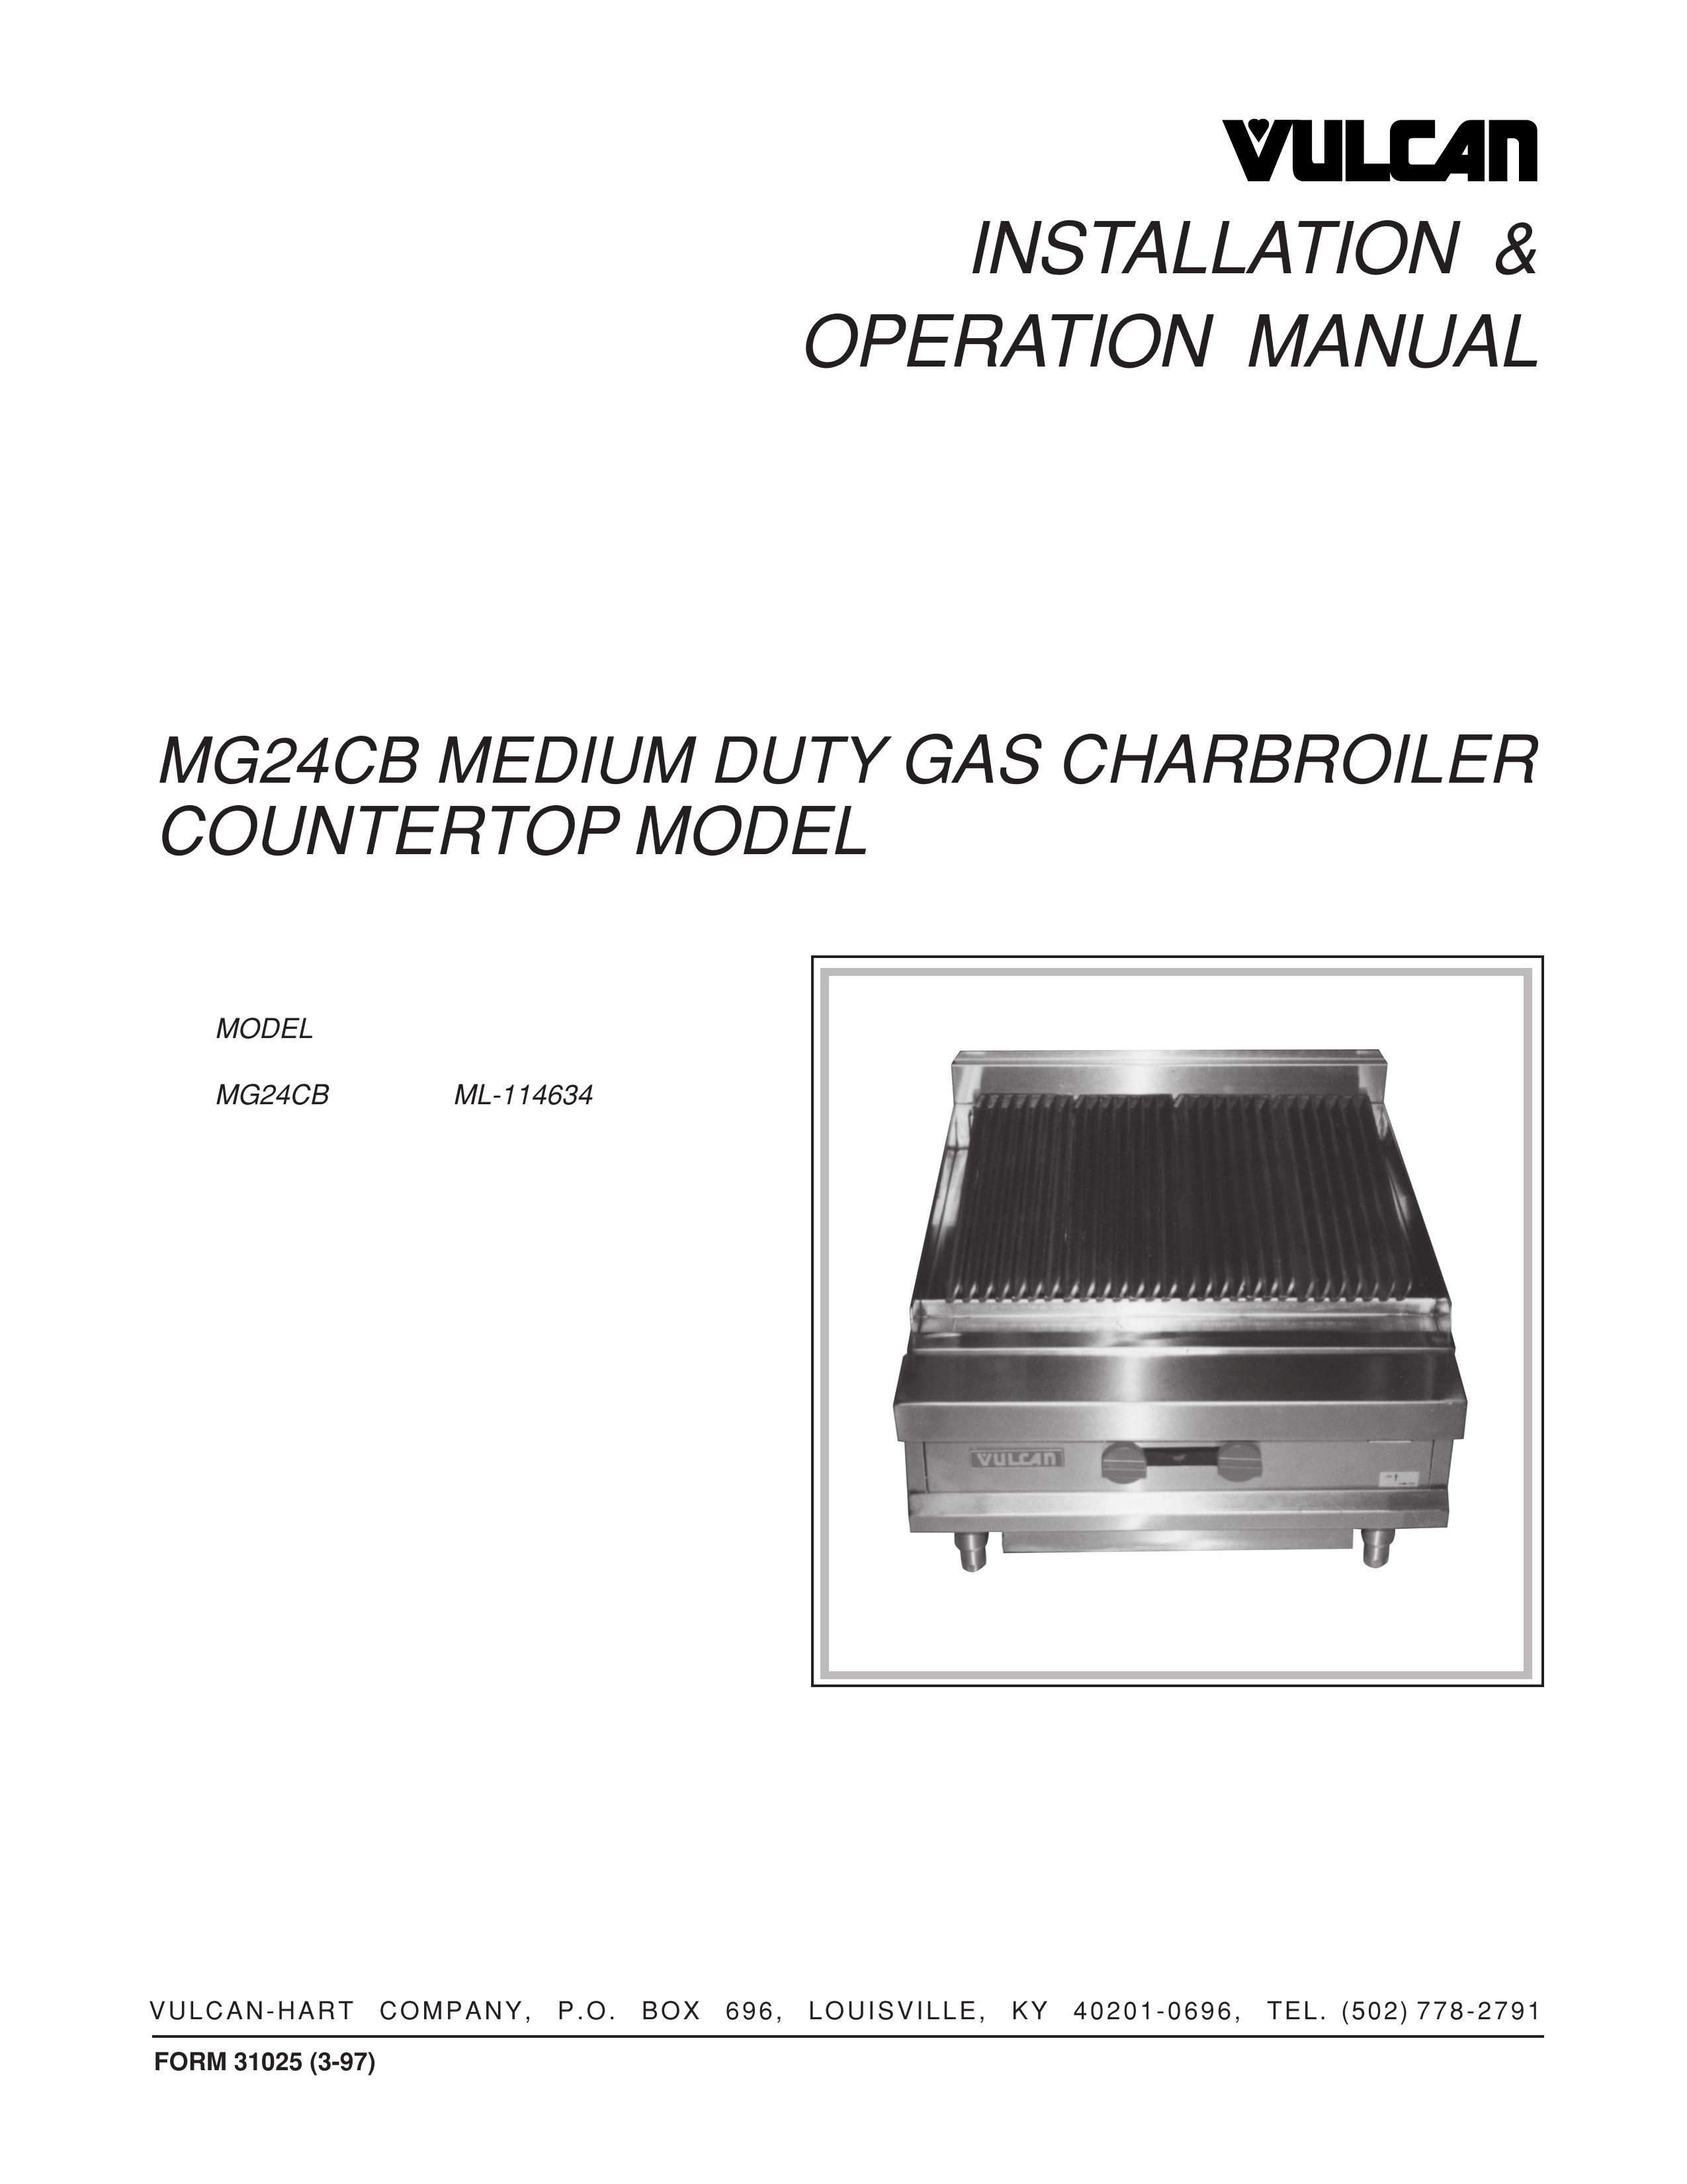 Vulcan-Hart MG24CB Charcoal Grill User Manual